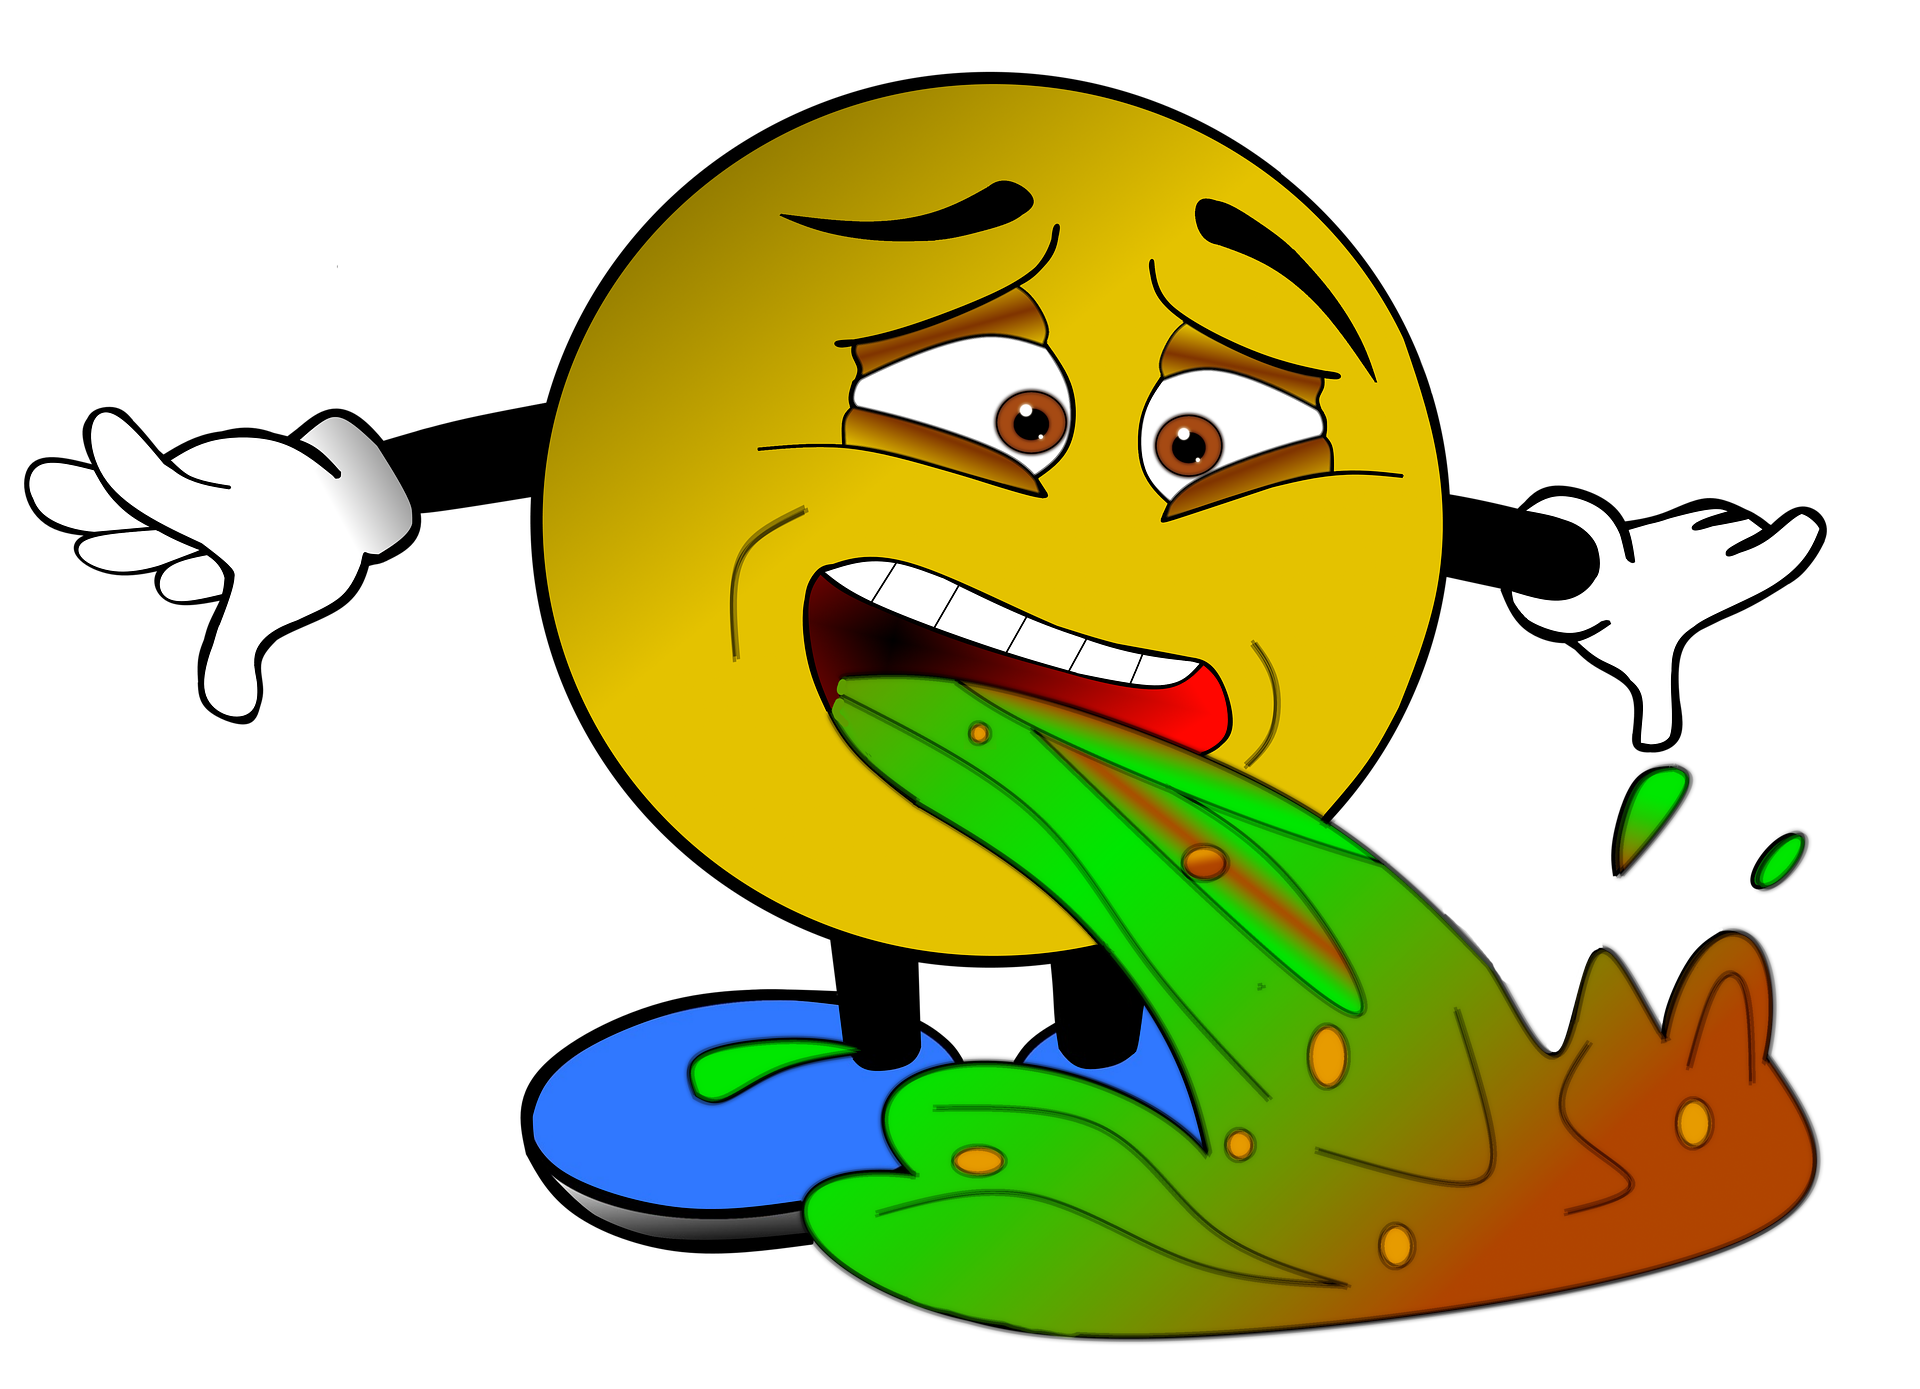 A emoji is puking due to nausea.